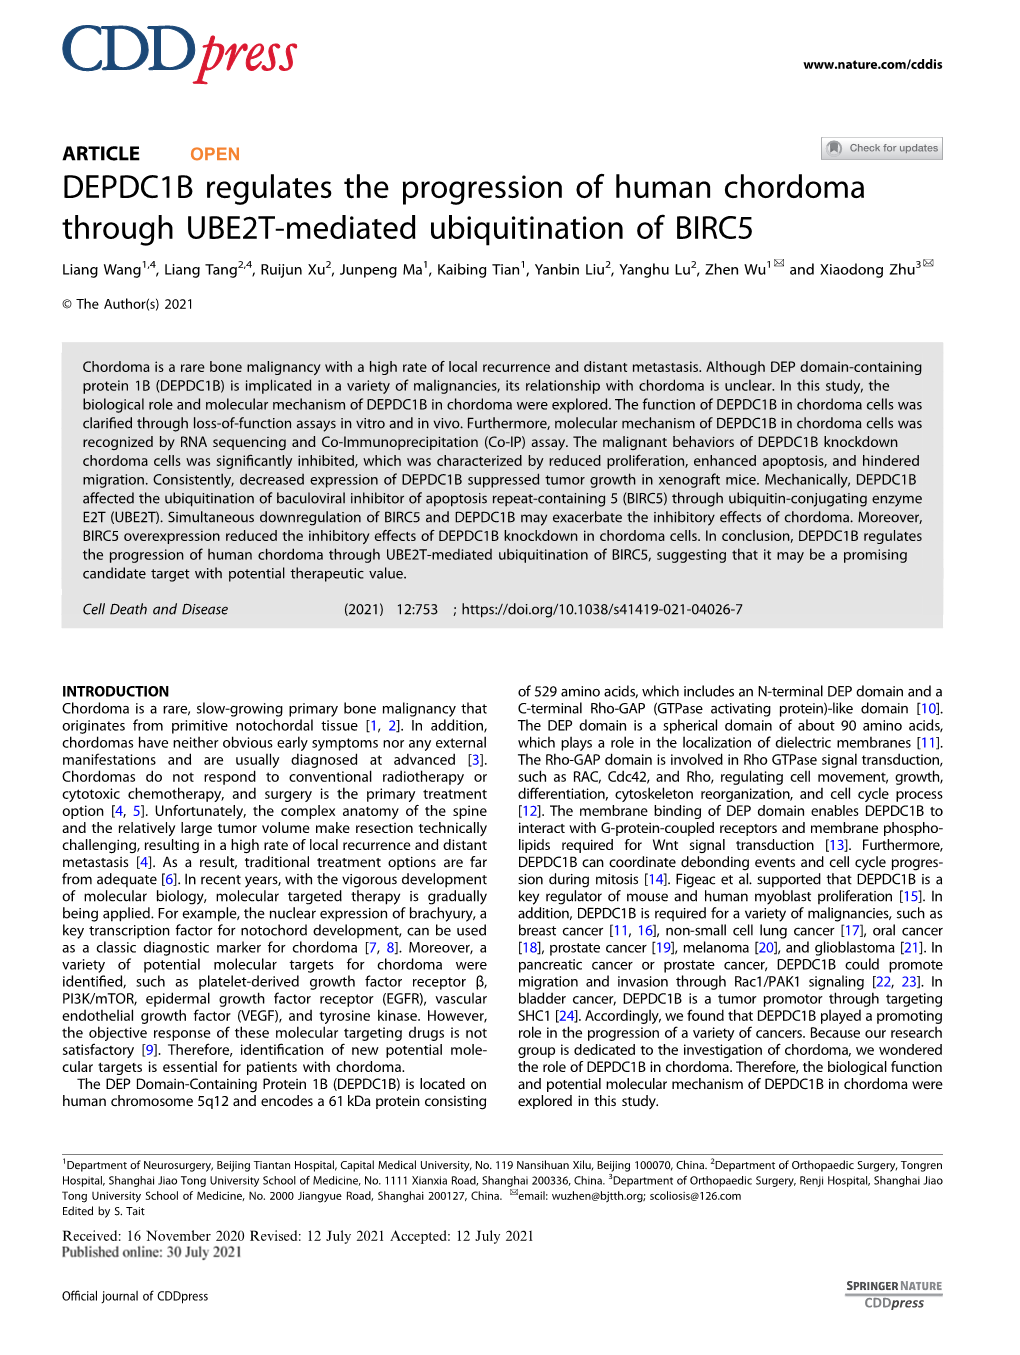 DEPDC1B Regulates the Progression of Human Chordoma Through